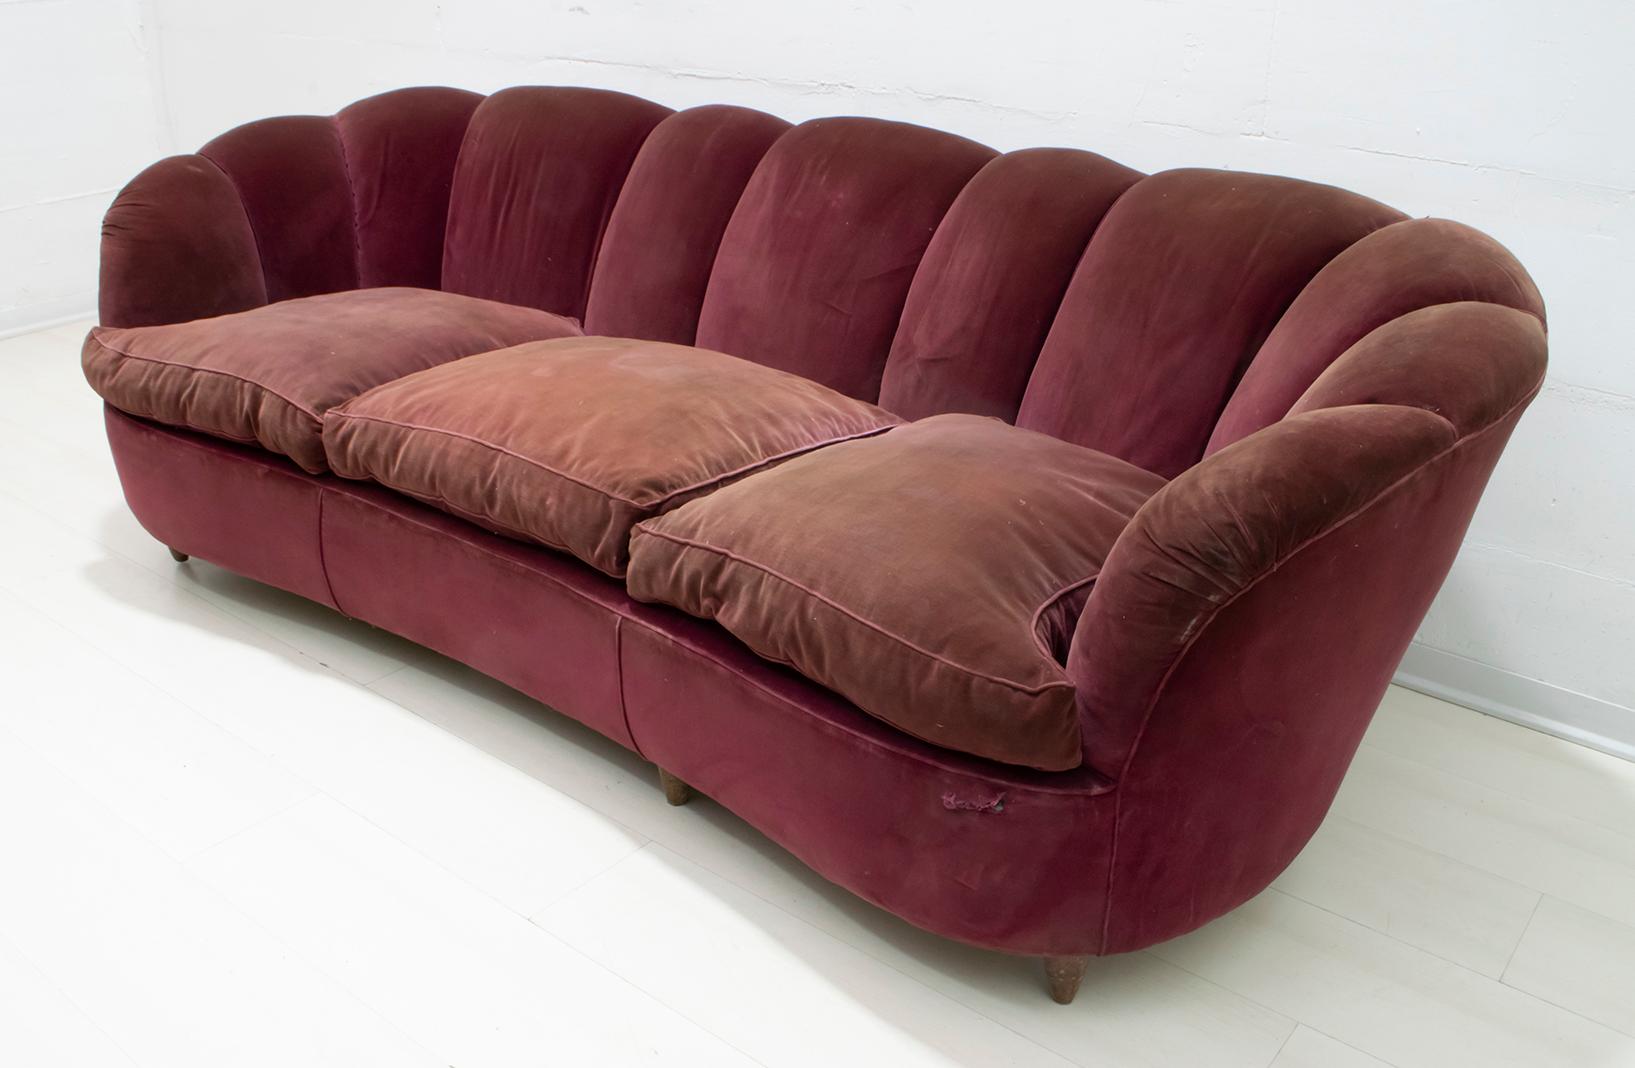 Mid-20th Century Gio Ponti Midcentury Rare Italian Velvet Curved Sofa 